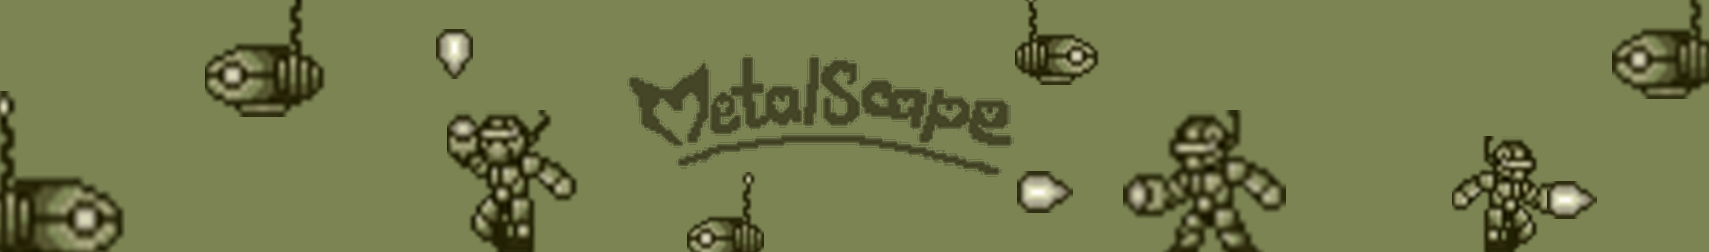 MetalScape